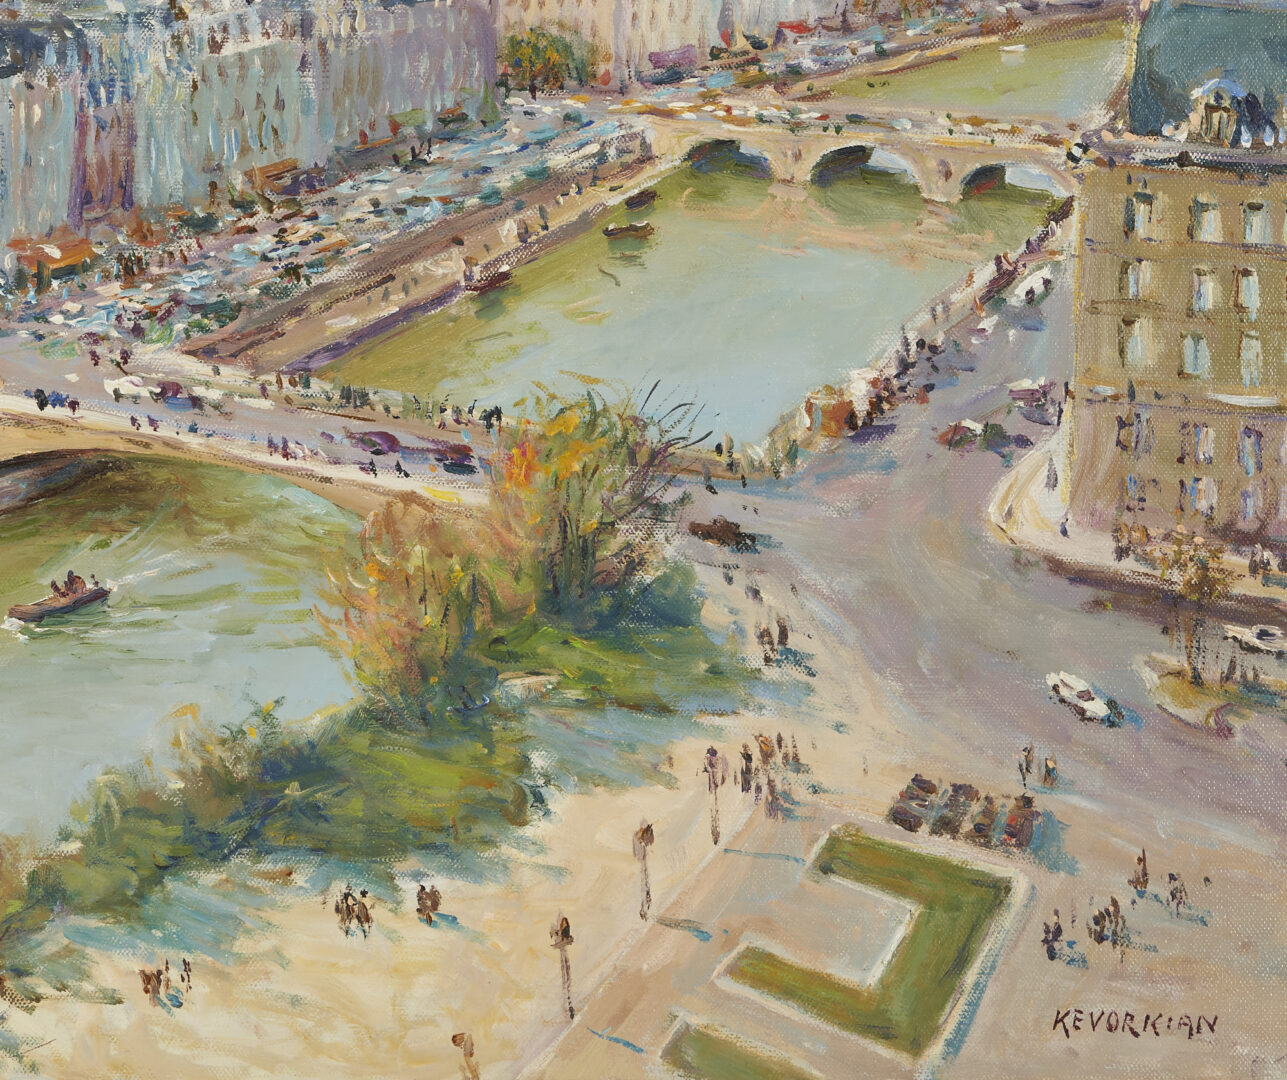 Lot 367: Jean Kevorkian O/C Landscape, View of Paris from Notre Dame